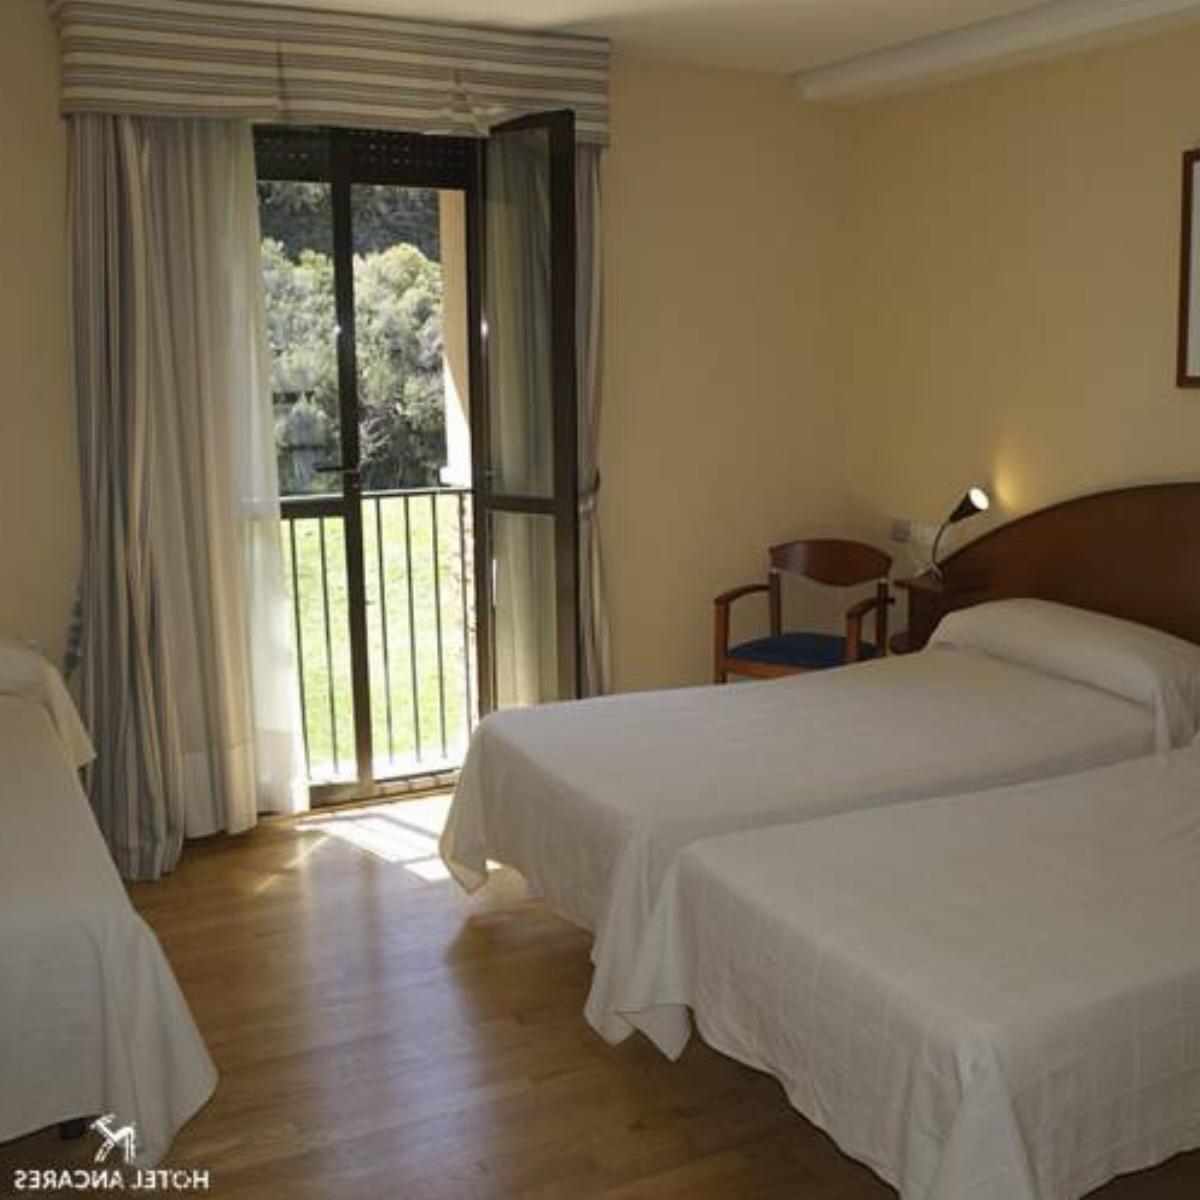 Ancares Hotel Balboa Spain